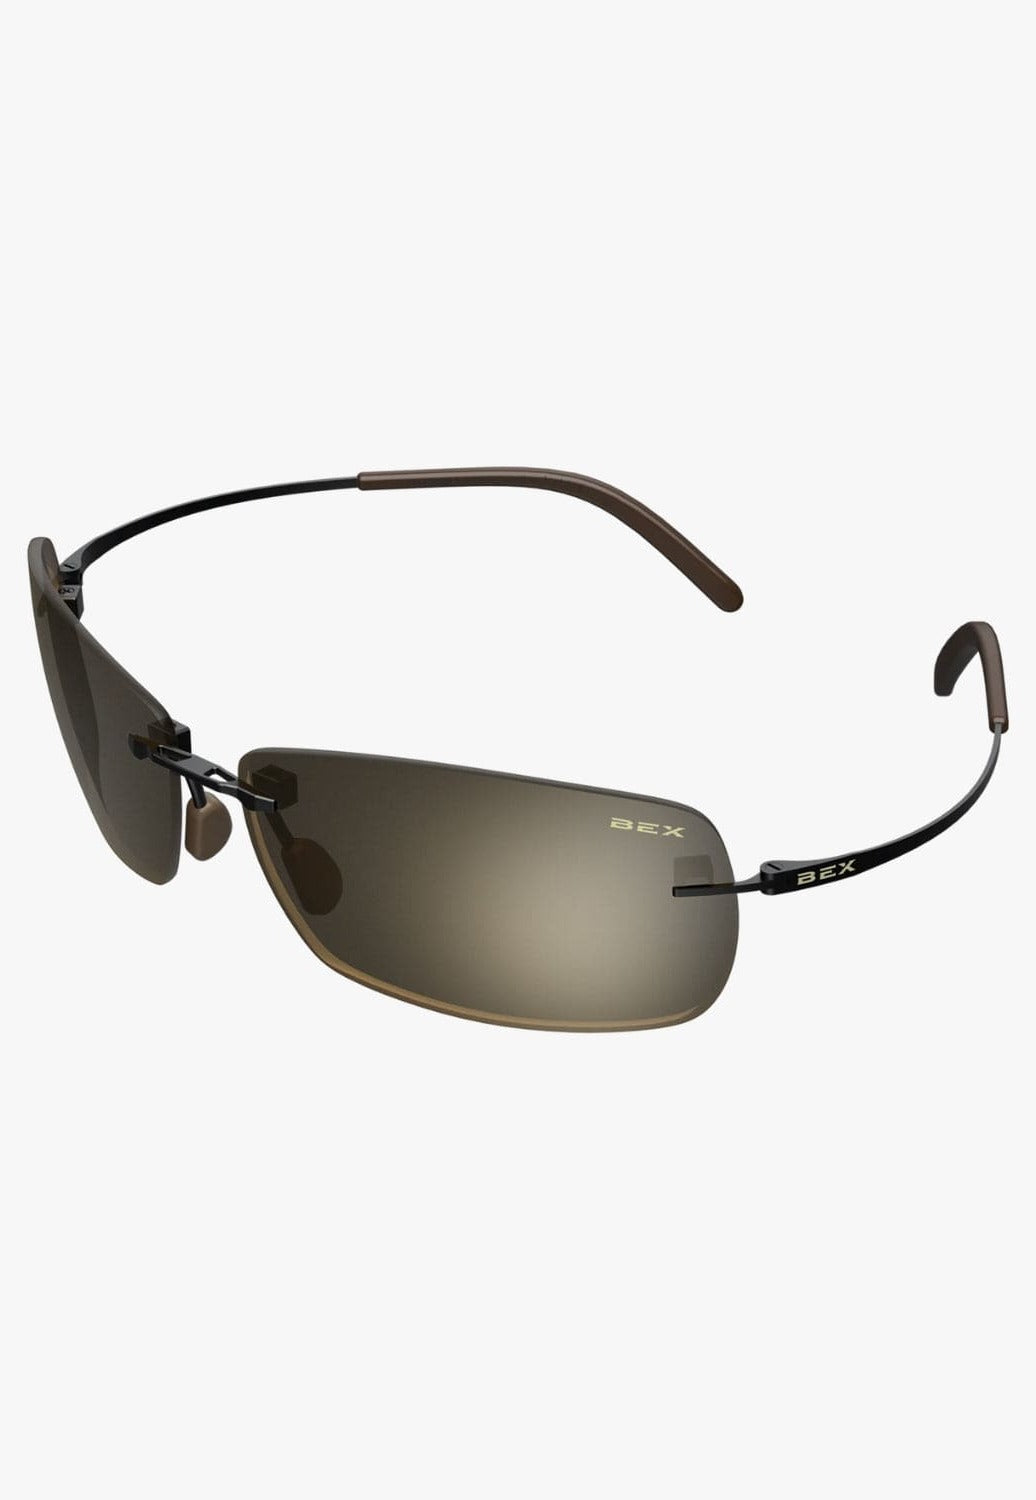 BEX ACCESSORIES-Sunglasses Black/Brown Bex Fynnland XL Sunglasses